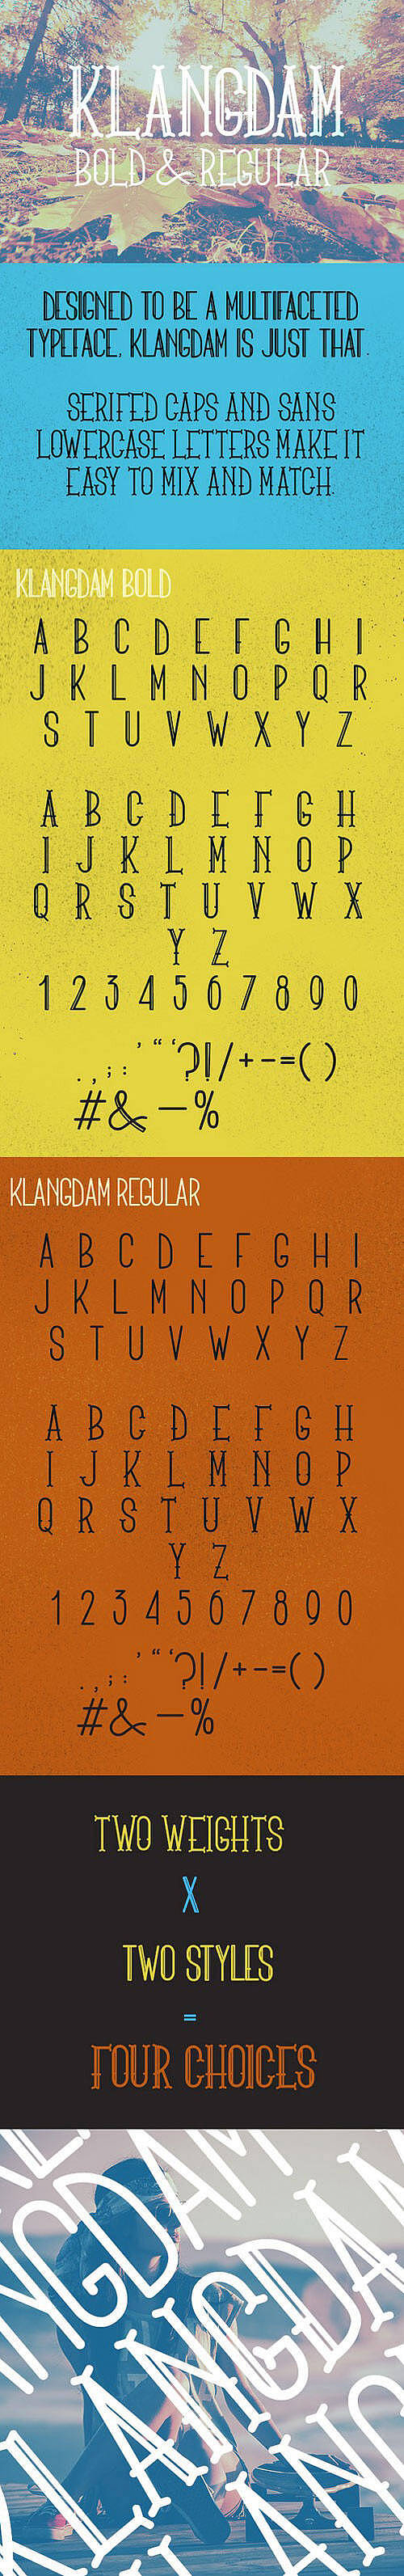 Klangdam可爱艺术设计英文字体，可爱手账字体 - 1